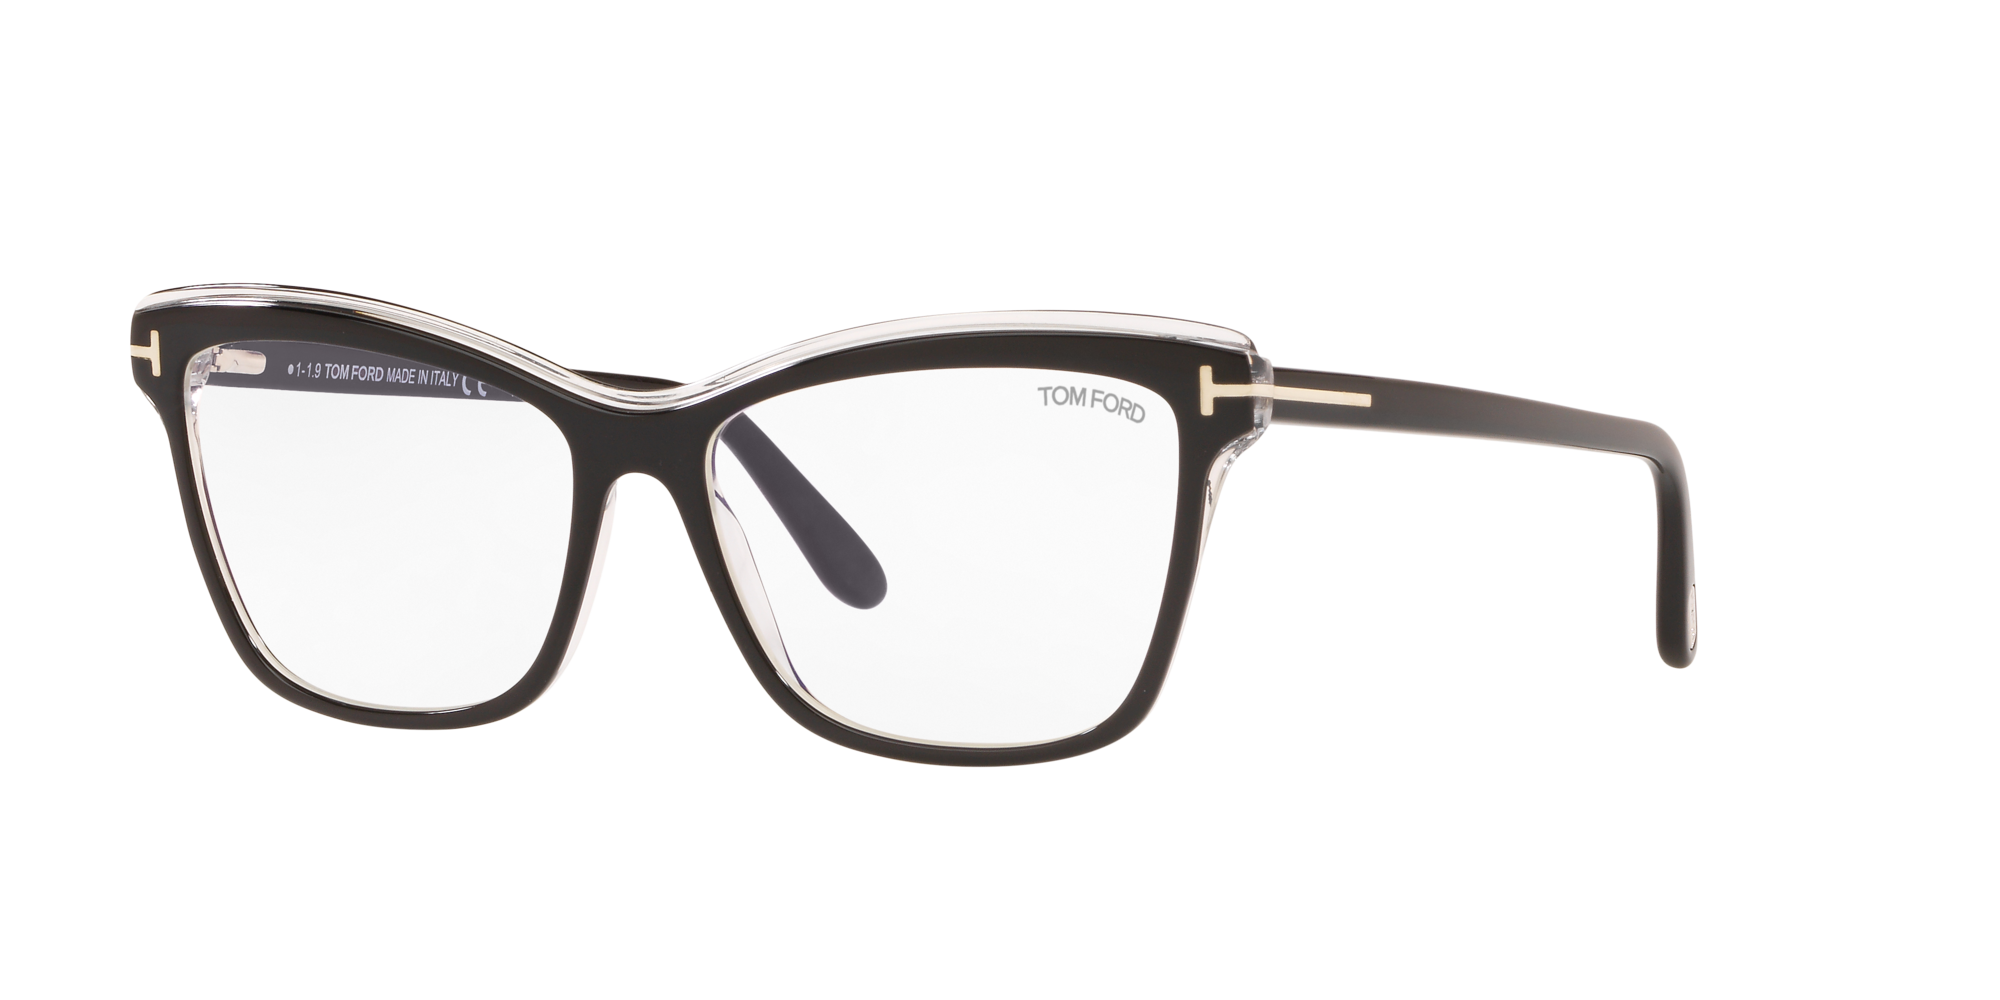 Tom Ford Ft5619 B Eyeglasses Lenscrafters